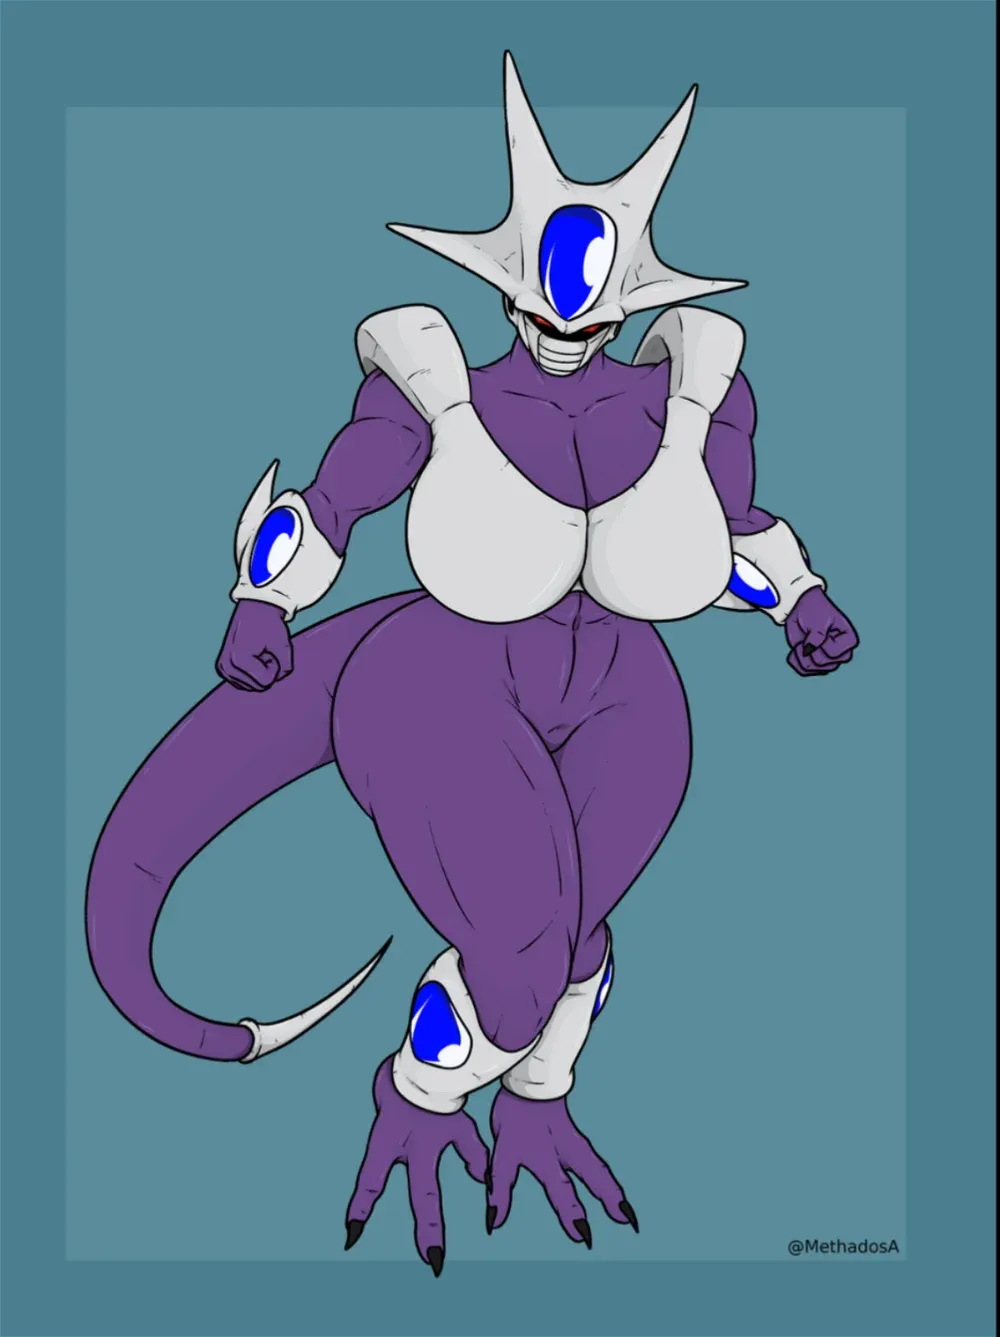 Avatar of Female Cooler | The Emperor’s Older Sister